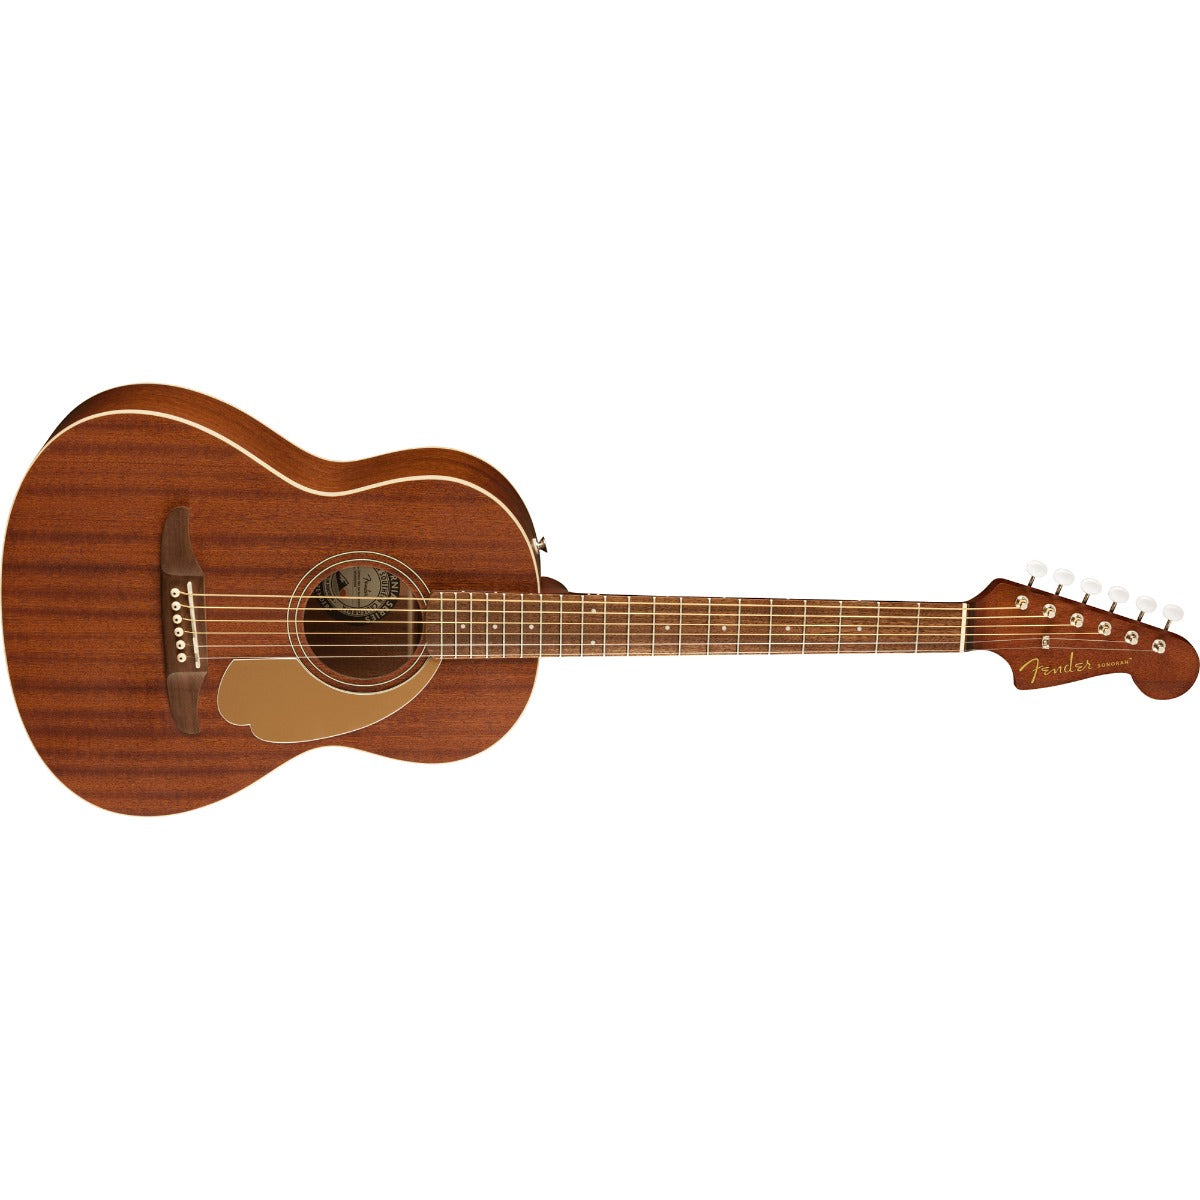 Fender Sonoran Mini Acoustic Guitar with Bag - Natural Mahogany View 2